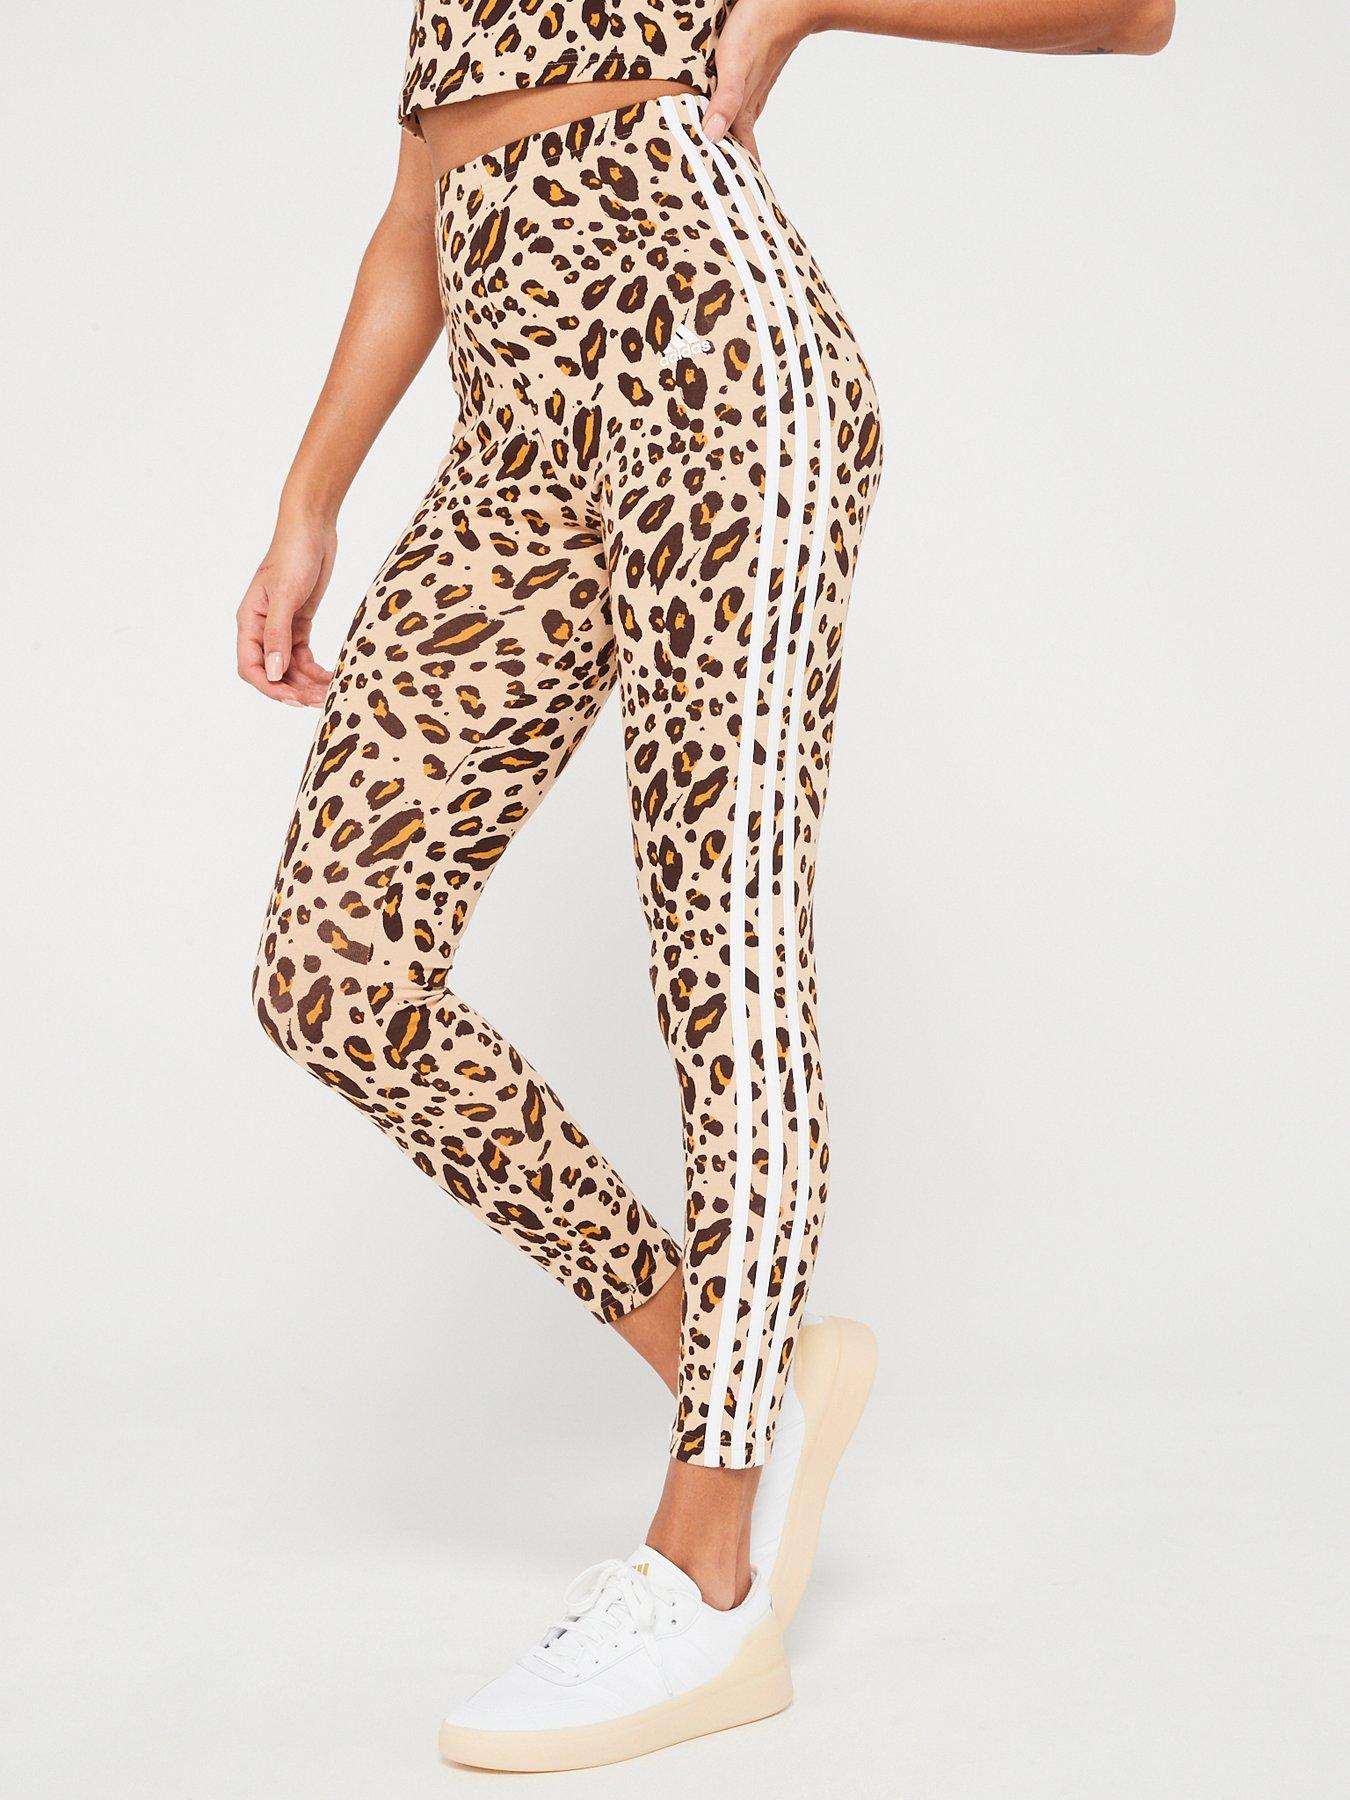 https://media.very.ie/i/littlewoodsireland/VUEU5_SQ1_0000000108_BEIGE_MDf/adidas-sportswear-womens-leopard-print-3-stripe-leggings-beige.jpg?$180x240_retinamobilex2$